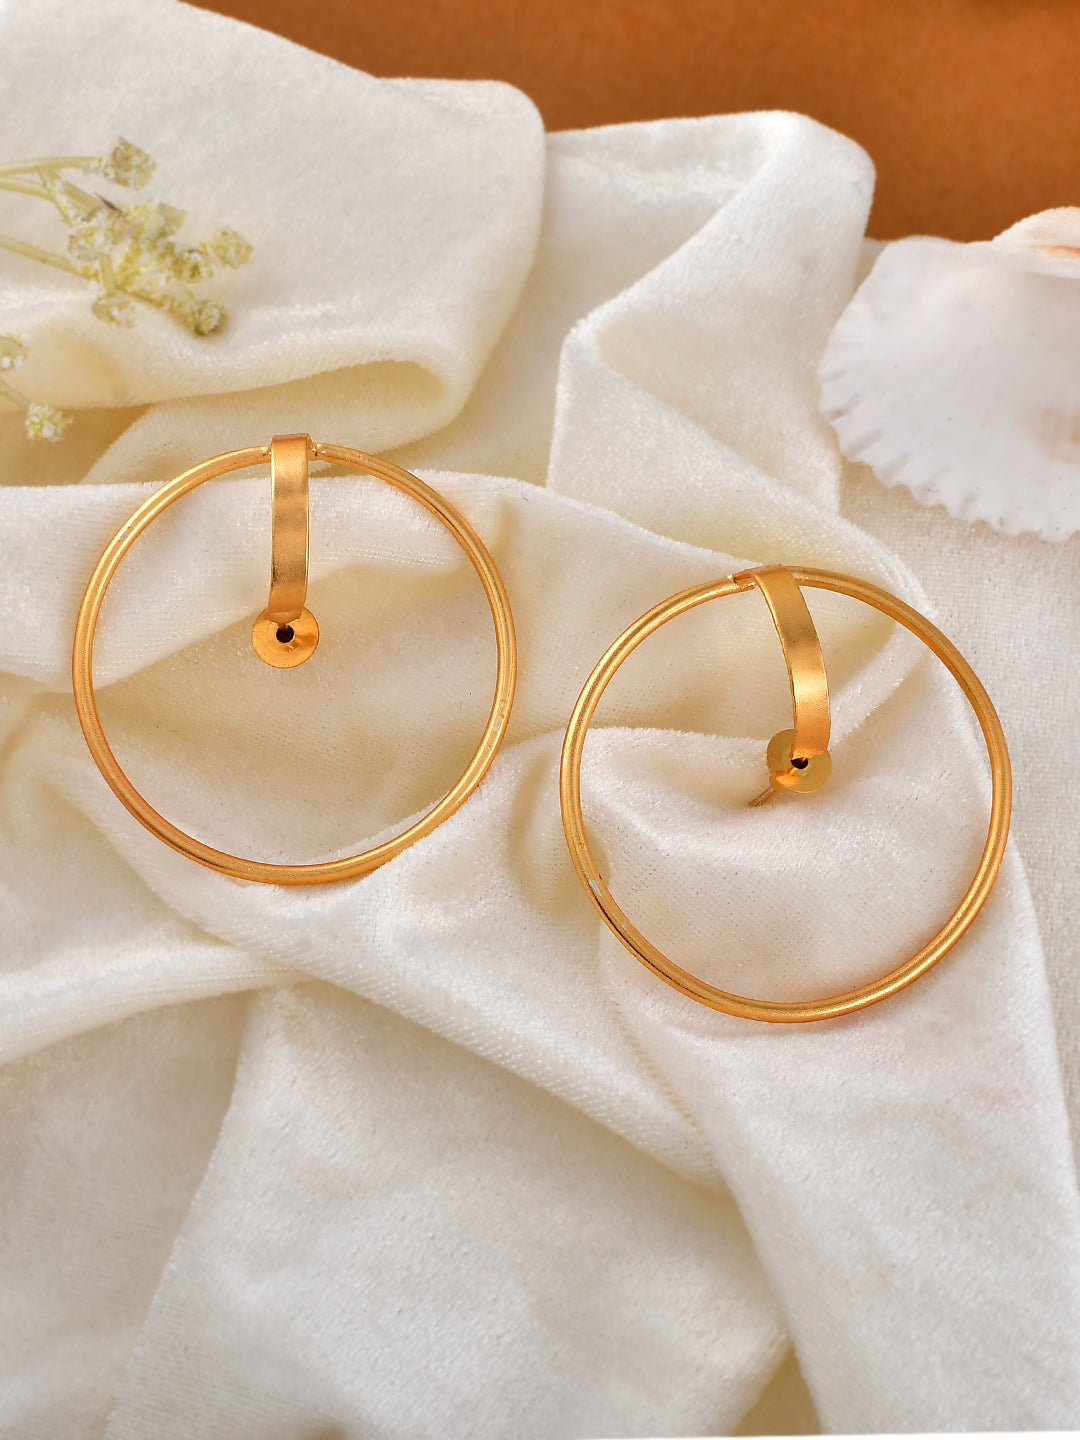 Gold plated hoop earring